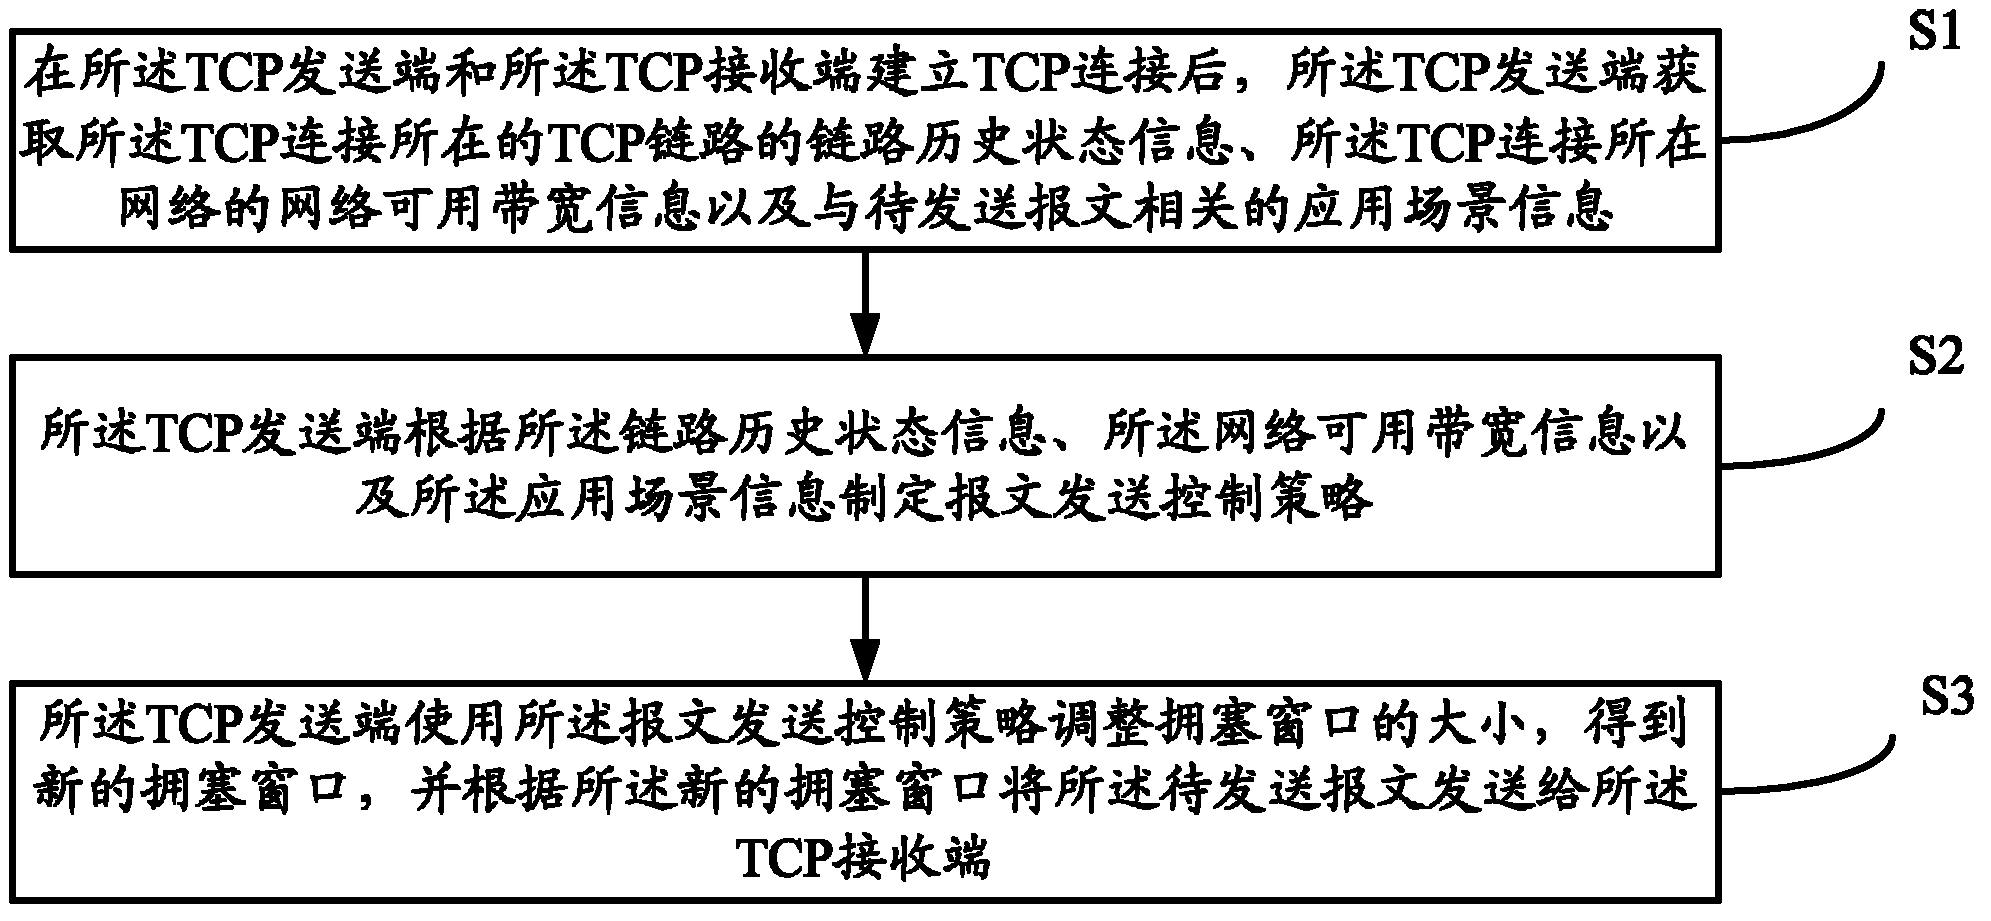 Message transmission method based on transmission control protocol (TCP)